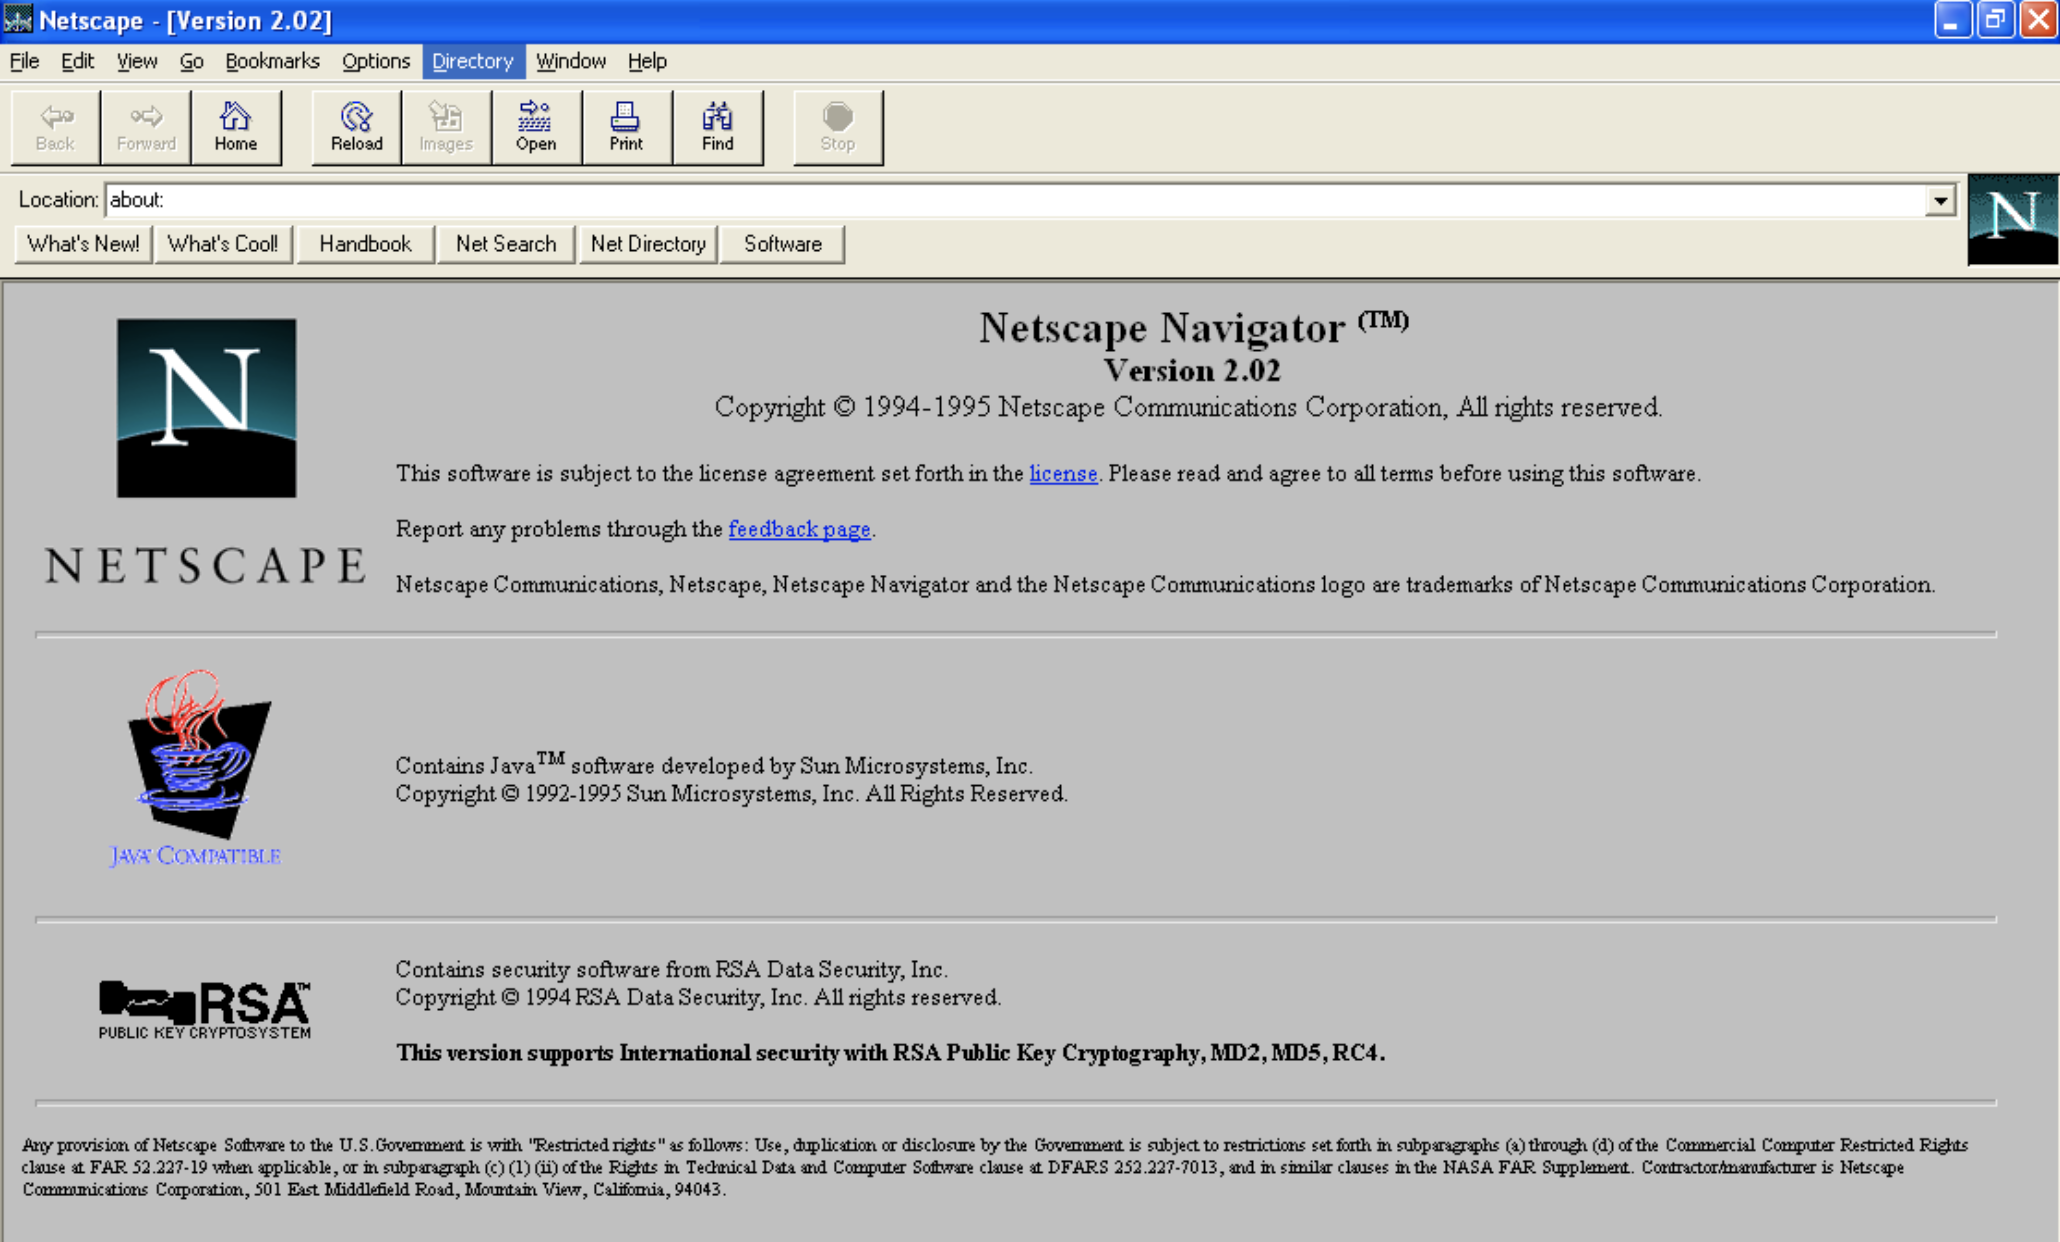 JavaScript in Netscape